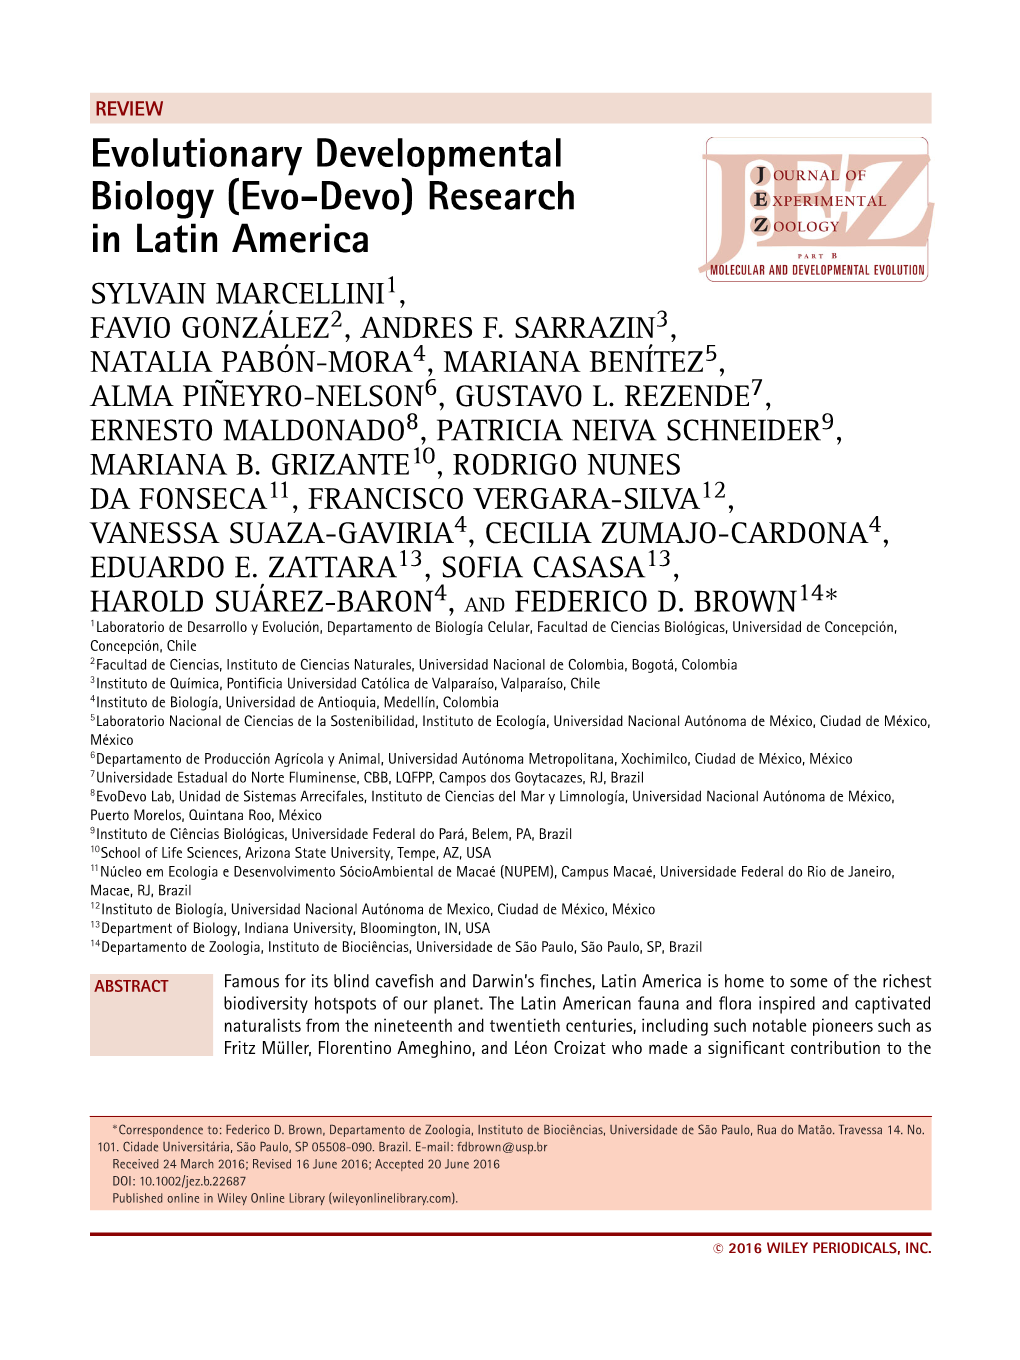 Evolutionary Developmental Biology (Evo-Devo) Research in Latin America SYLVAIN MARCELLINI1, FAVIO GONZÁLEZ2, ANDRES F